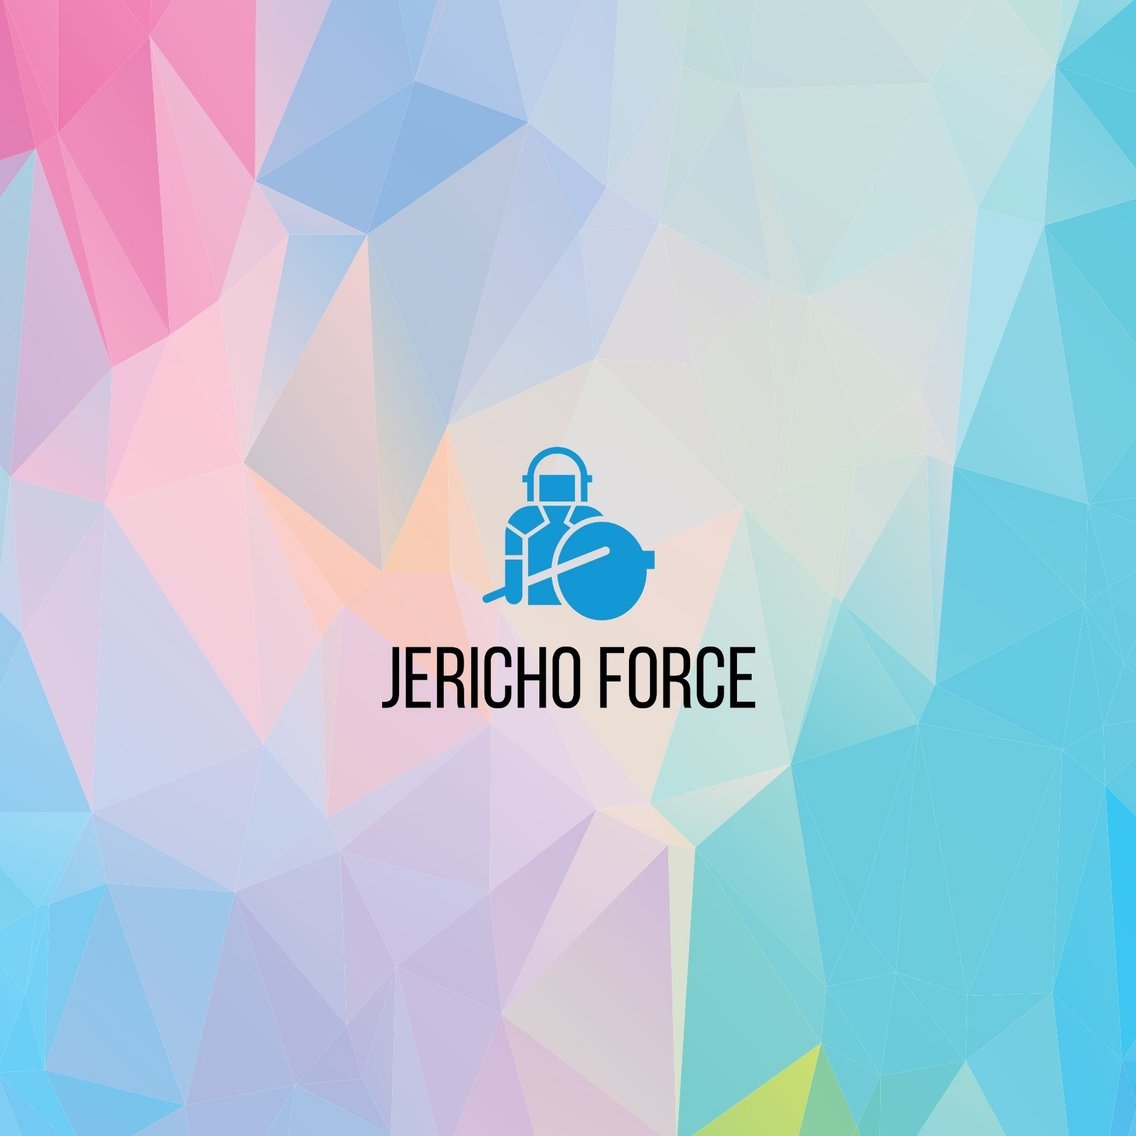 THE JERICHO FORCE PODCAST - immagine di copertina
